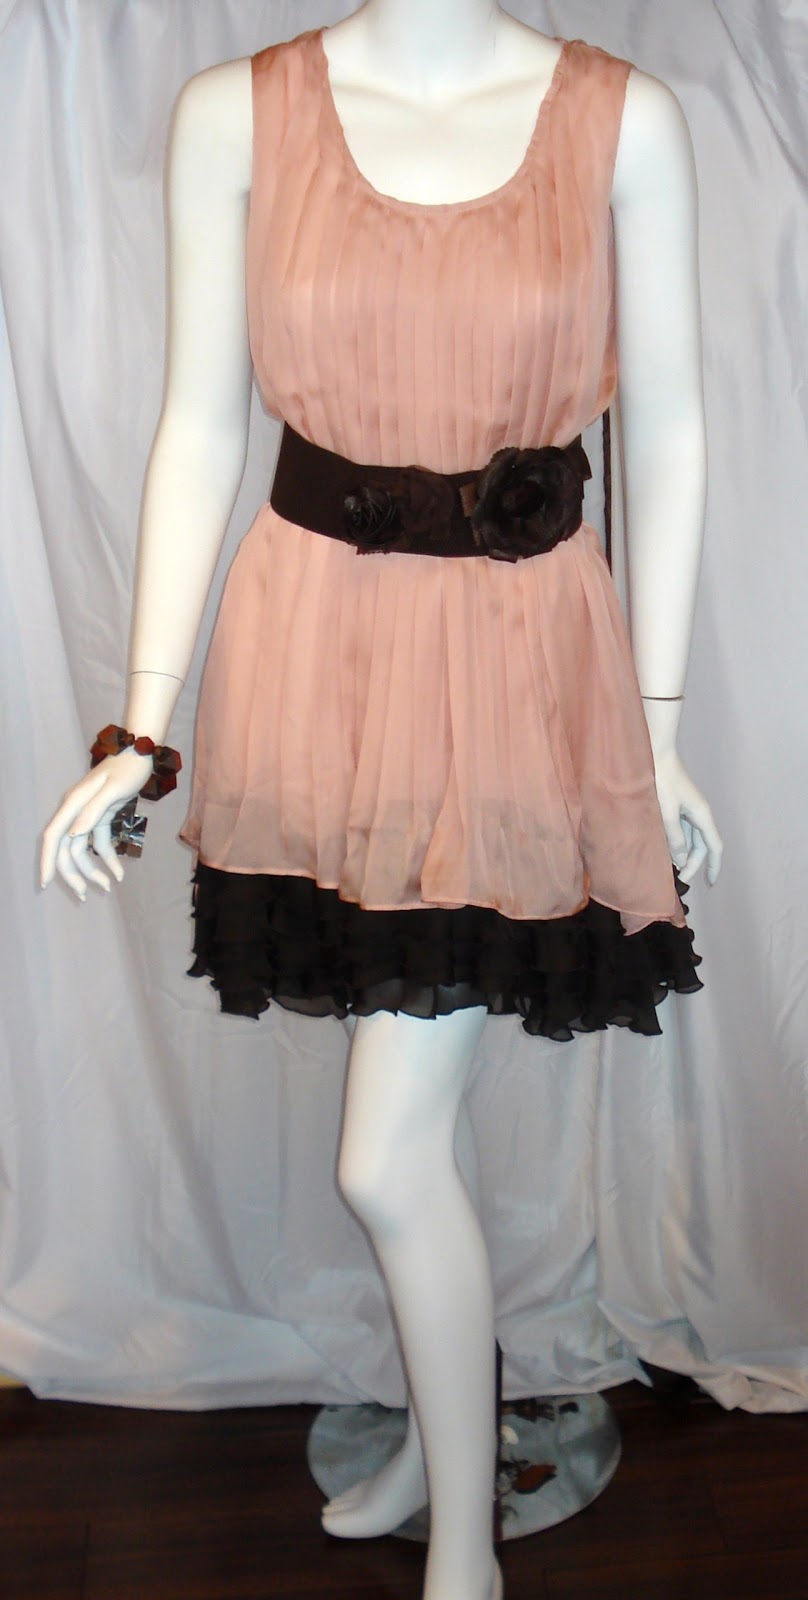 shop Pinkiss: New RYU Dresses and Tops at Pinkiss!